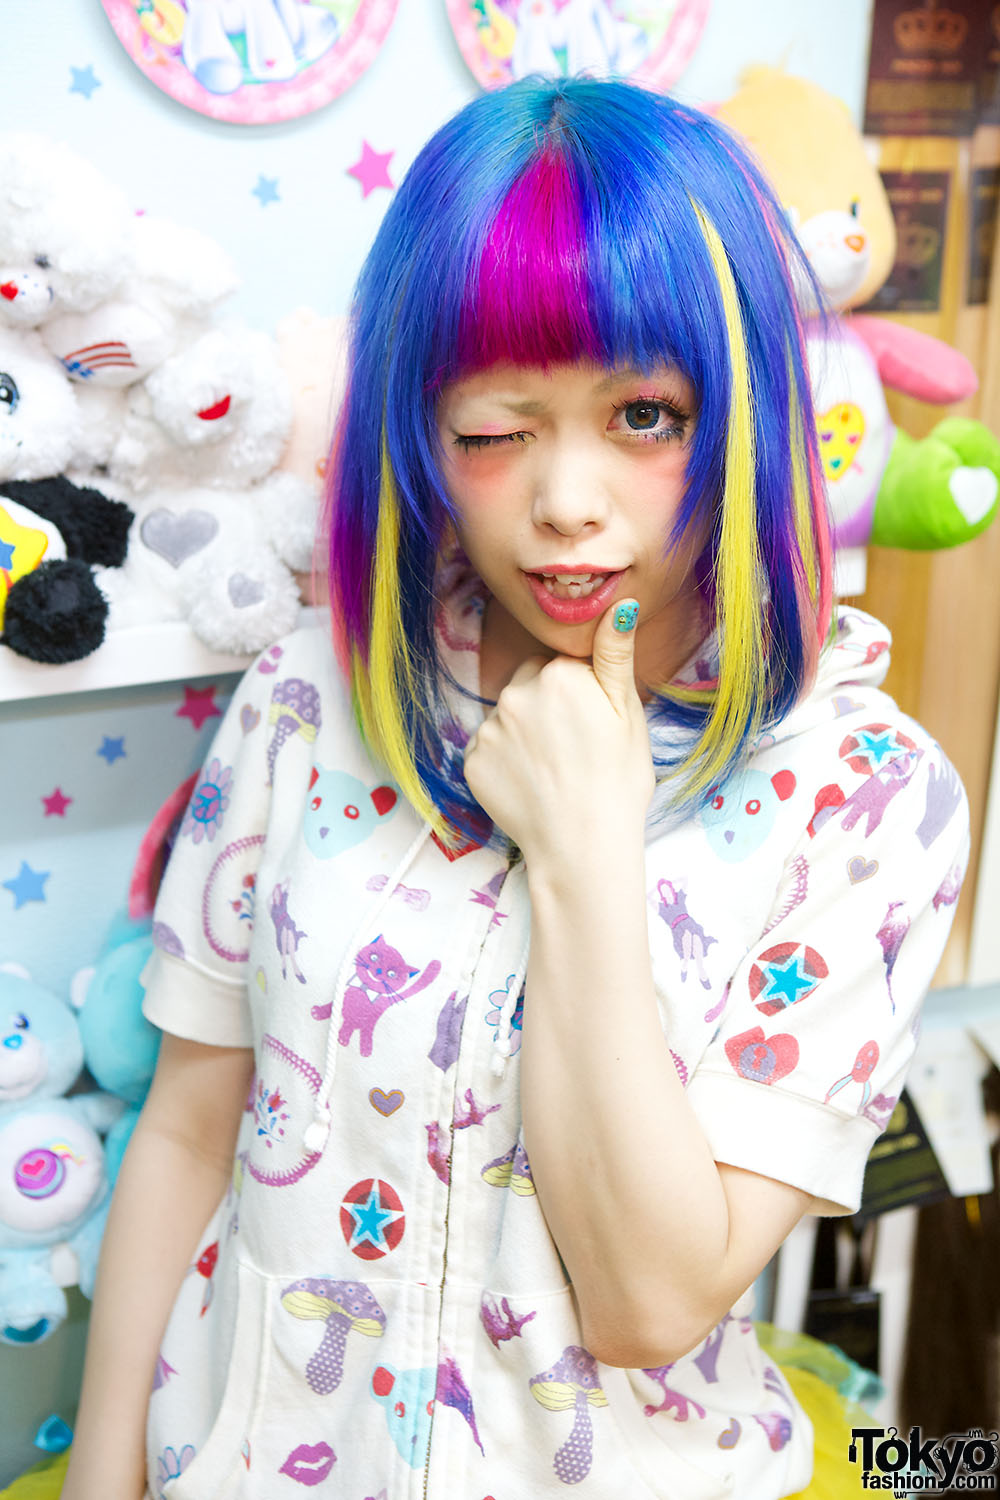 Viva Cute Candy - Kawaii & Colorful Hair Salon in Tokyo